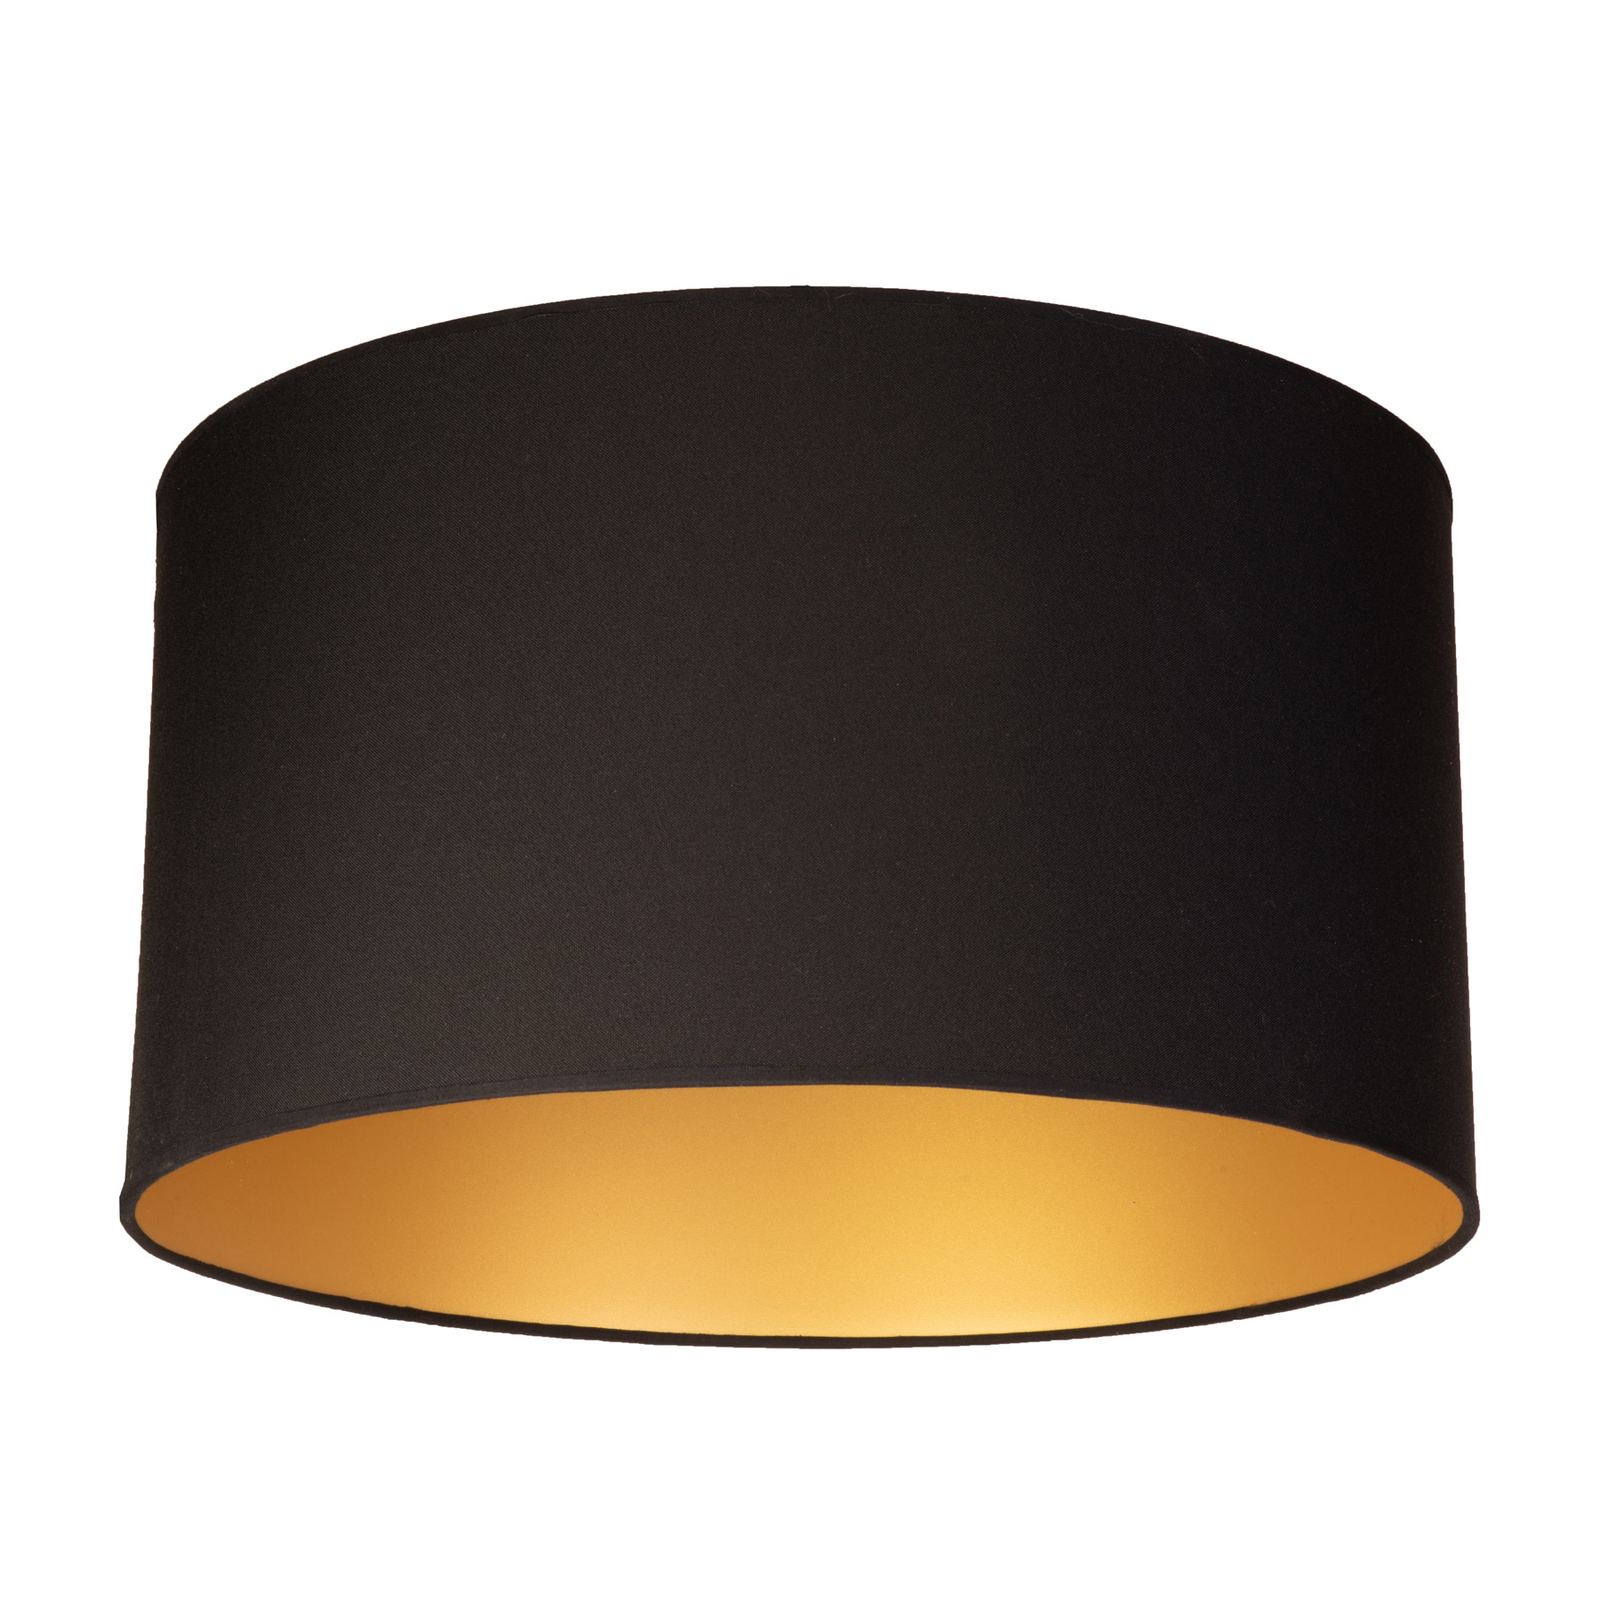 Roller ceiling light Ø 60 cm, black/gold